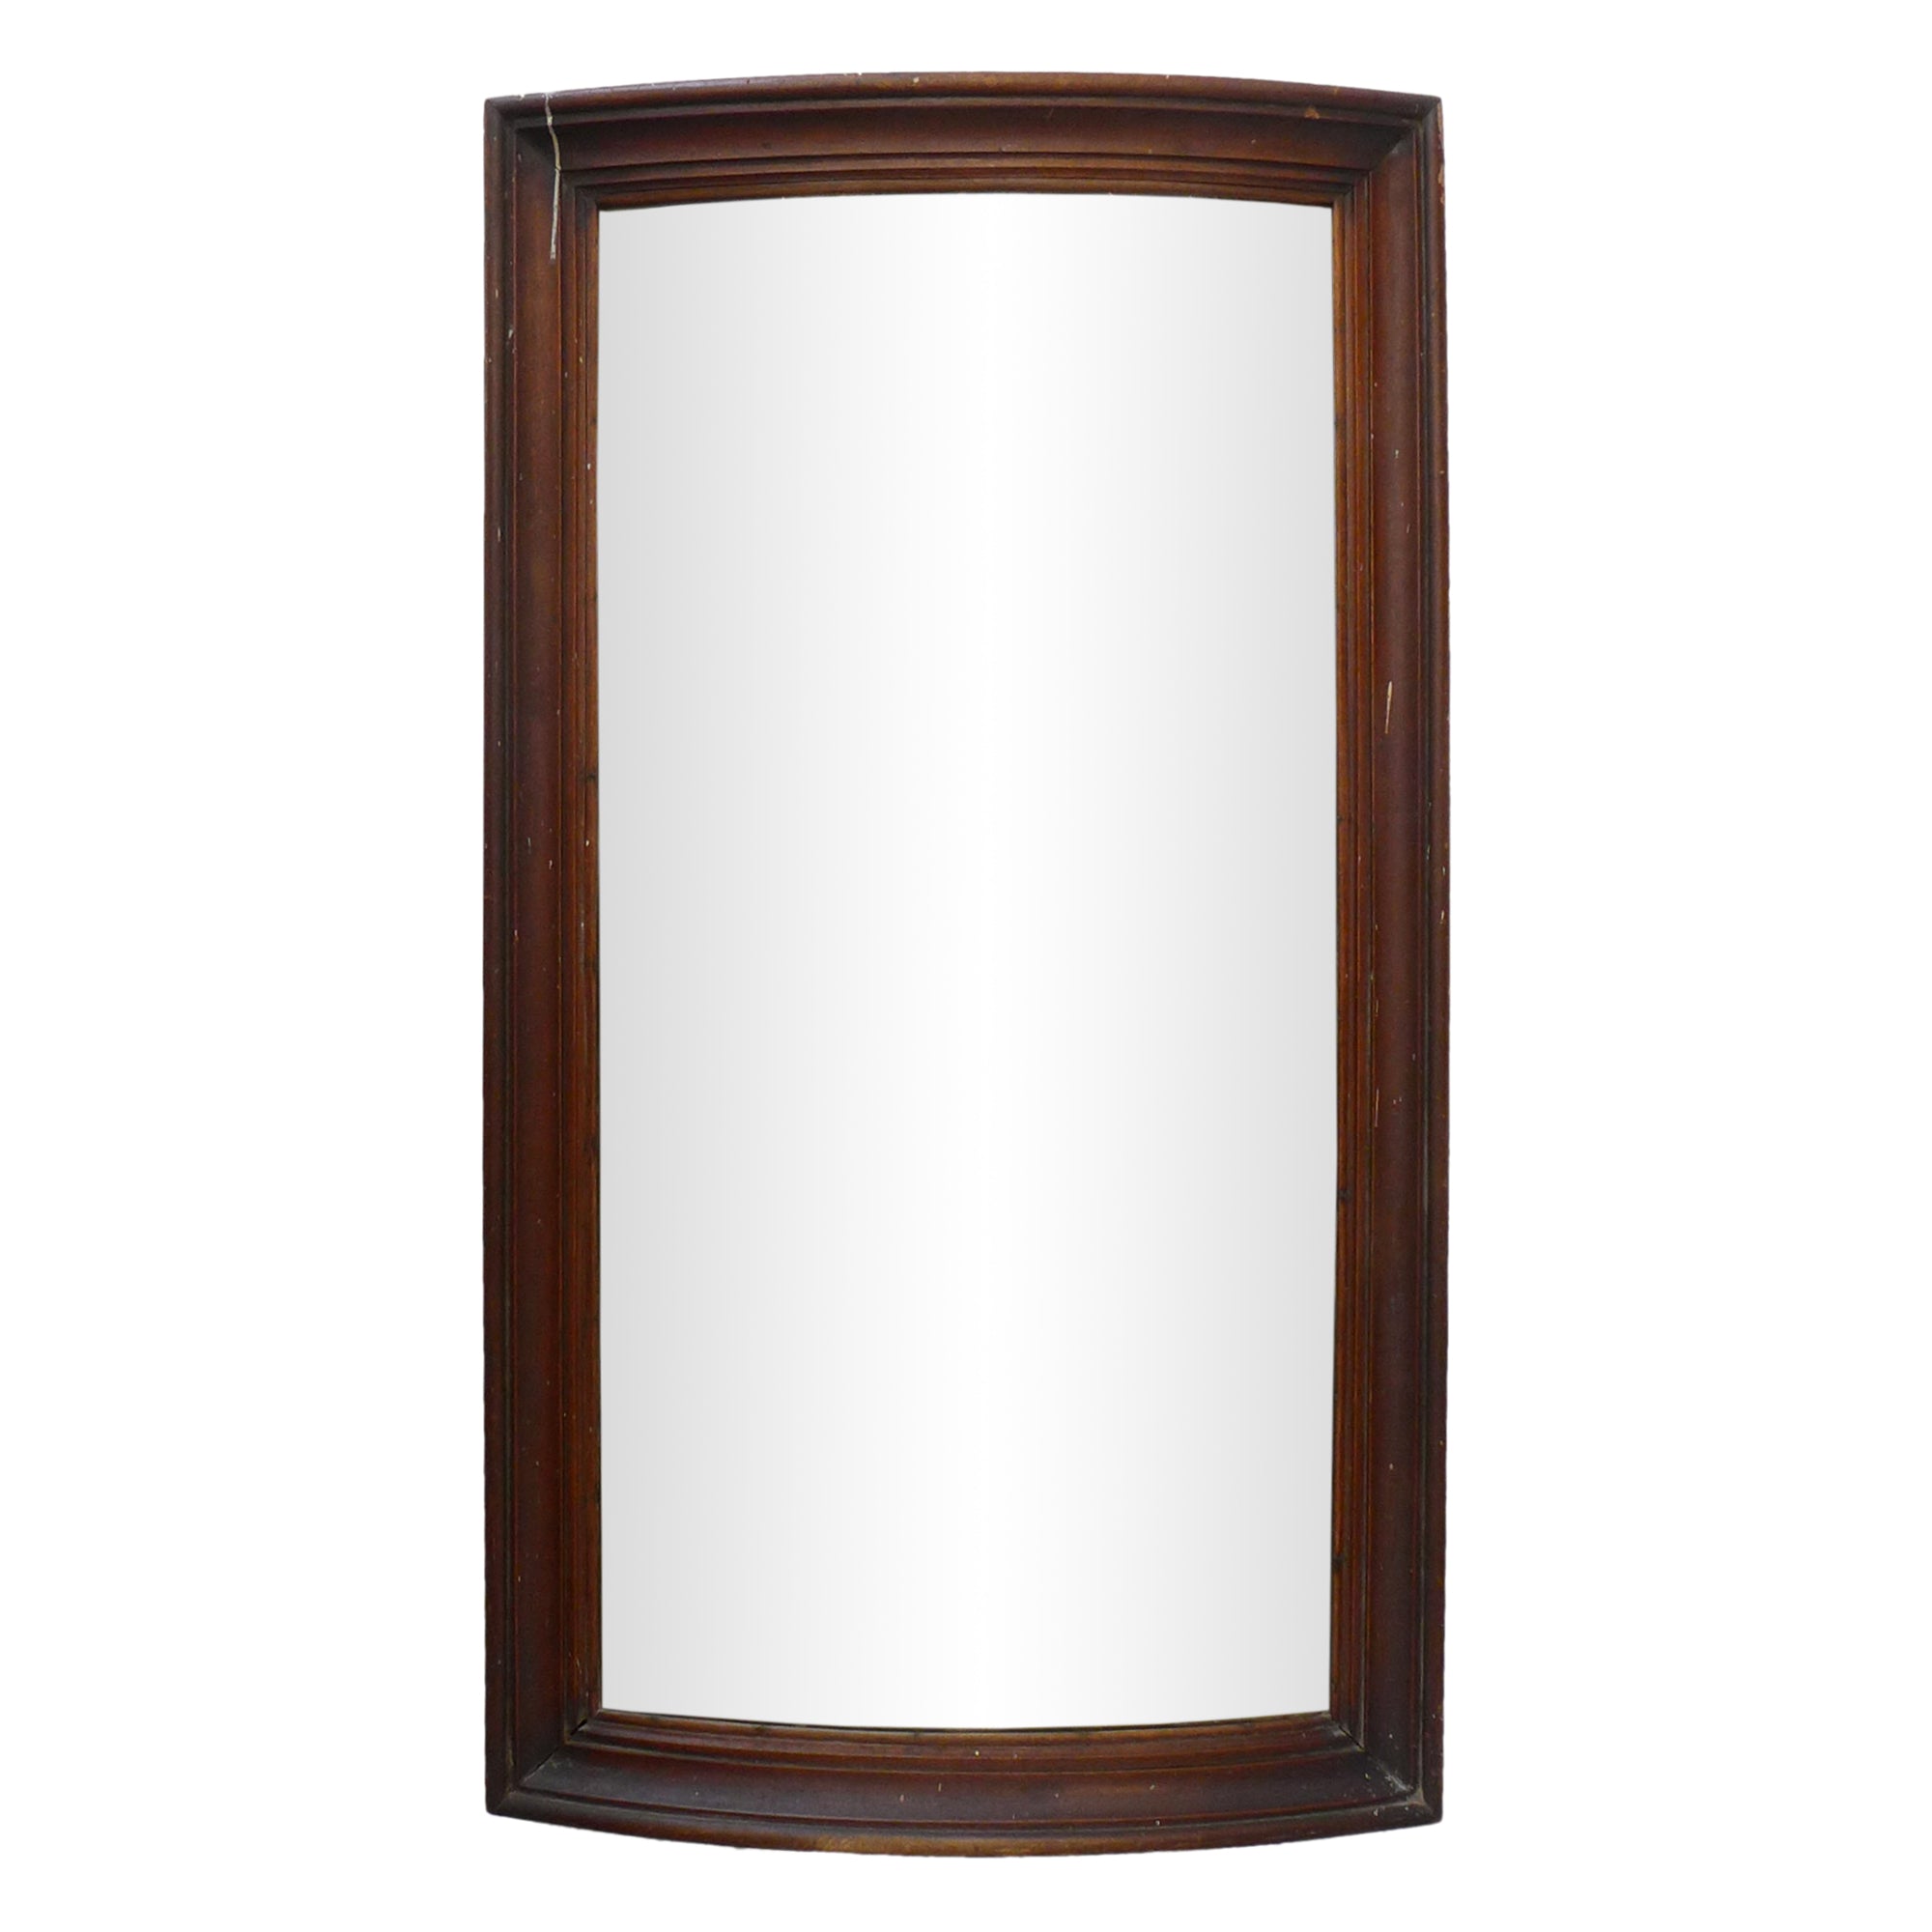 Full-Length Convex Mirror in Wood Frame